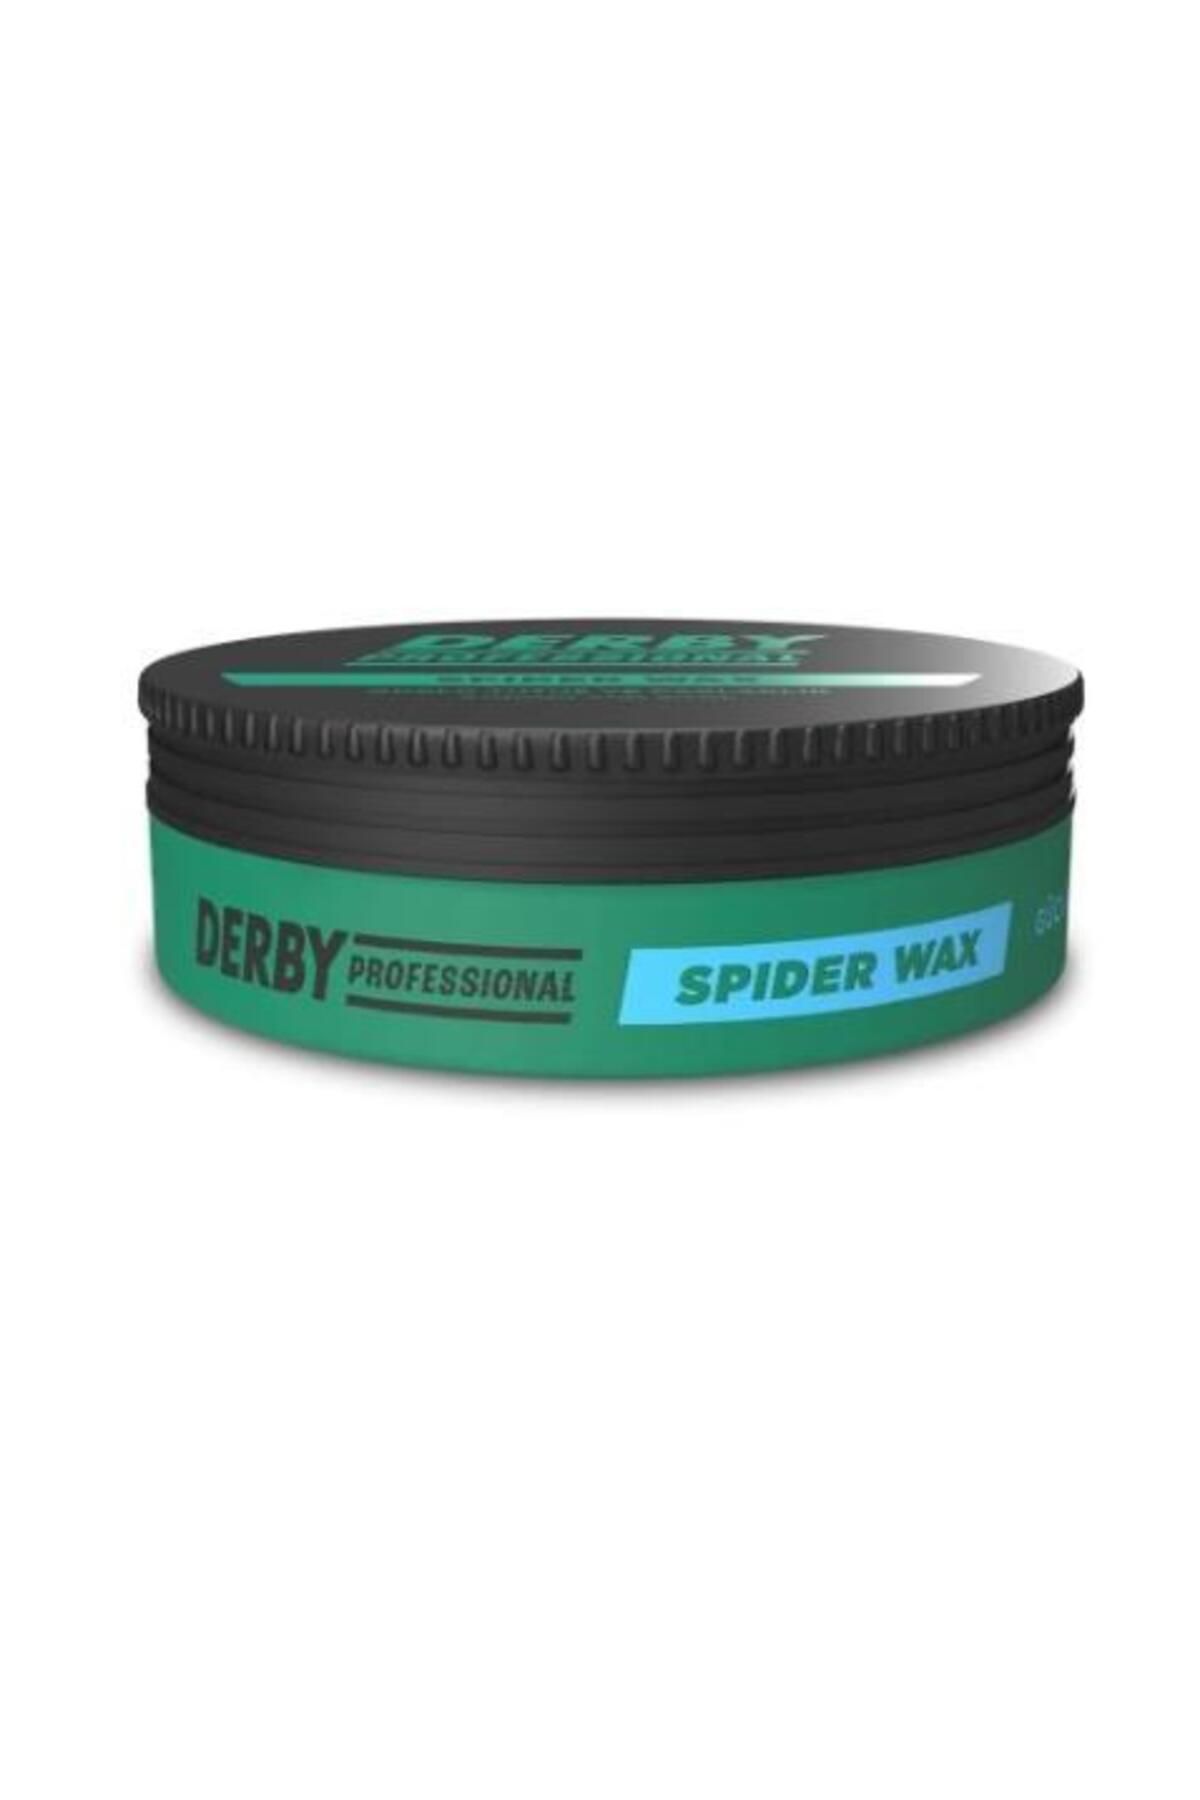 Derby Professional Spıder Wax Güçlü Tutuş 150ml